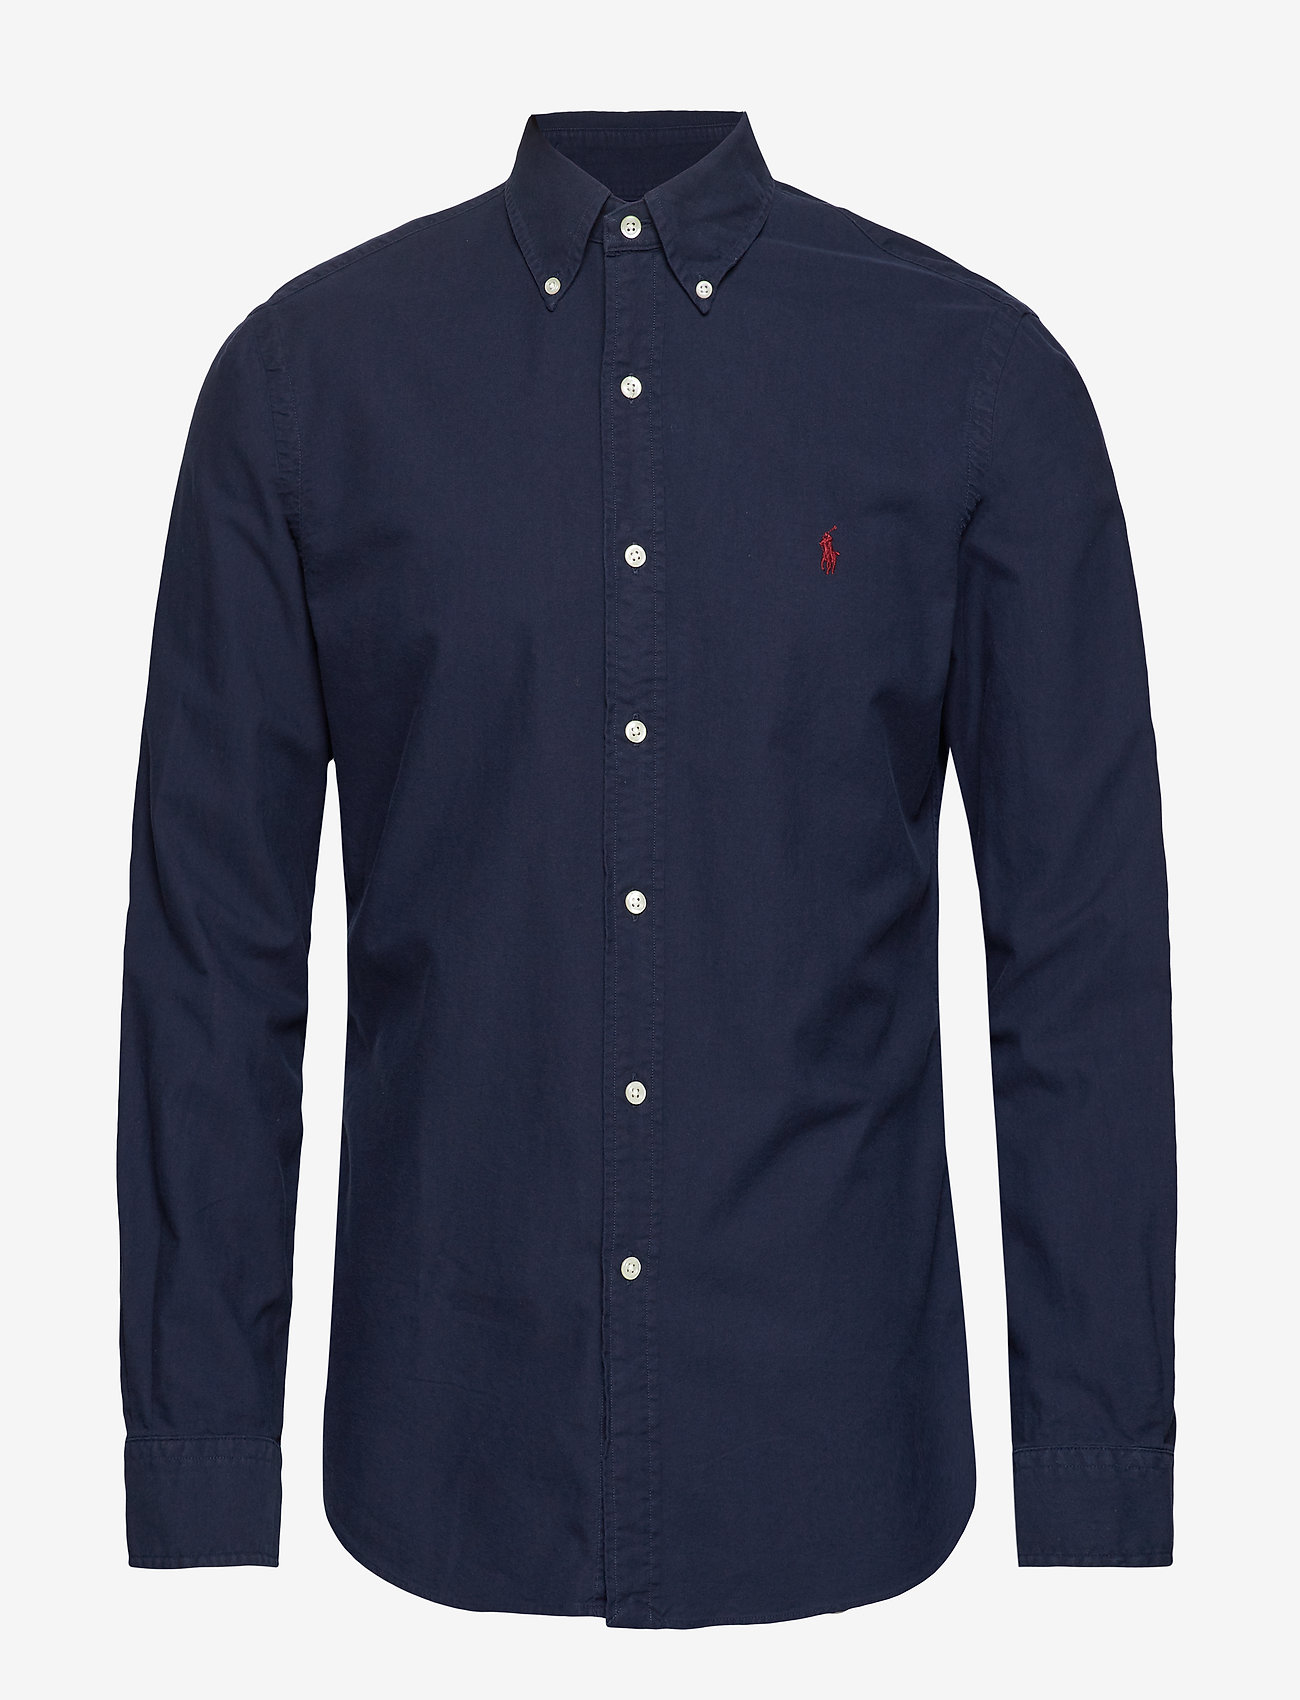 Polo Ralph Lauren - Slim Fit Garment-Dyed Oxford Shirt - oxford-hemden - rl navy - 1